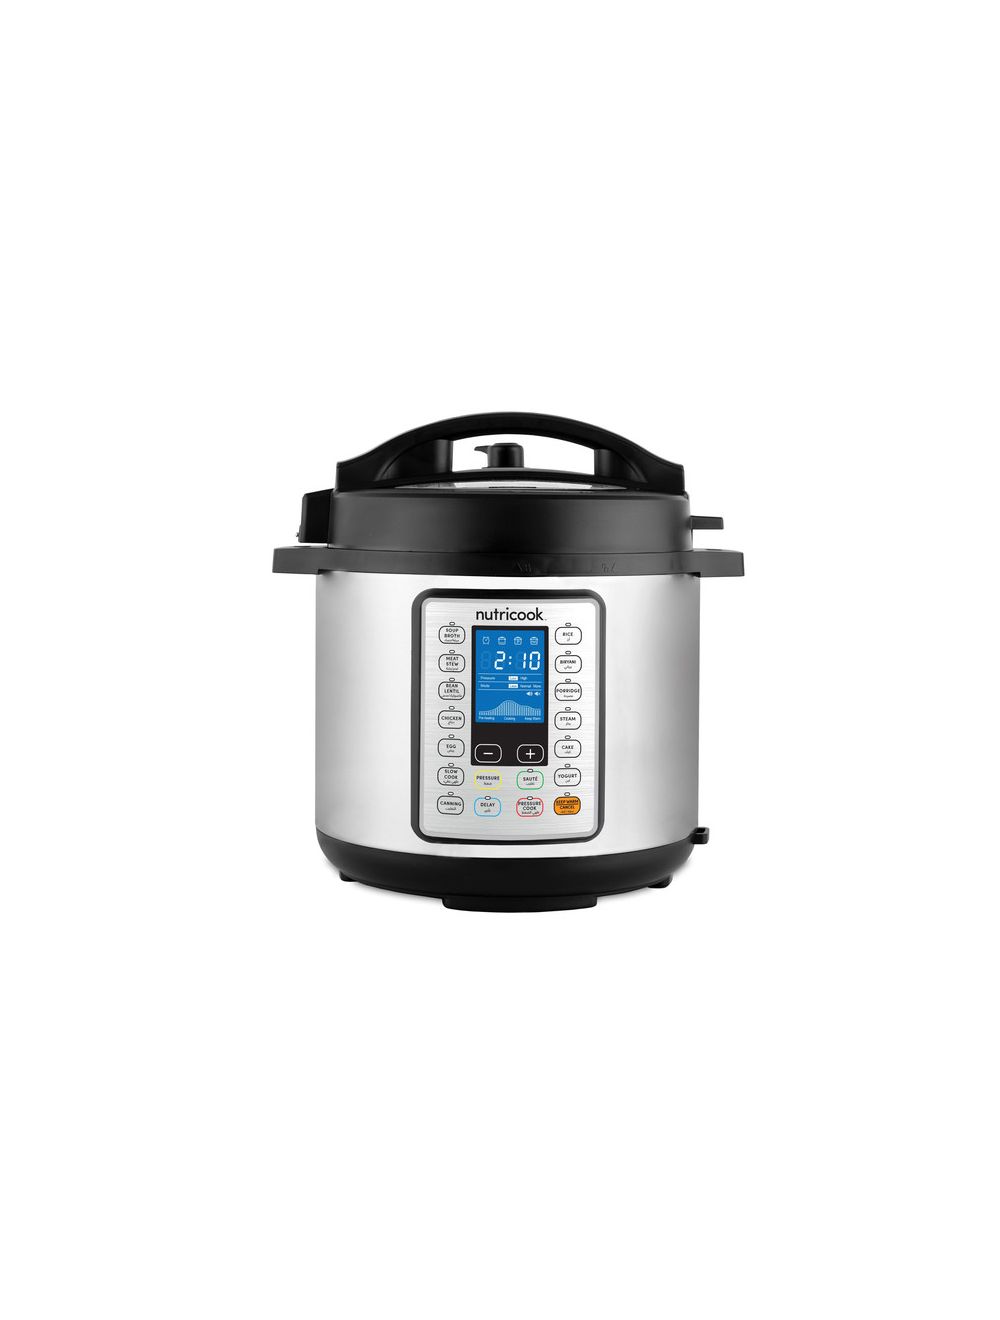 Nutricook Smart Pot Prime 10-in-1 Multi-use Pressure Cooker, 8 L, 1200 Watts, Silver/Black-NC-SPPR8